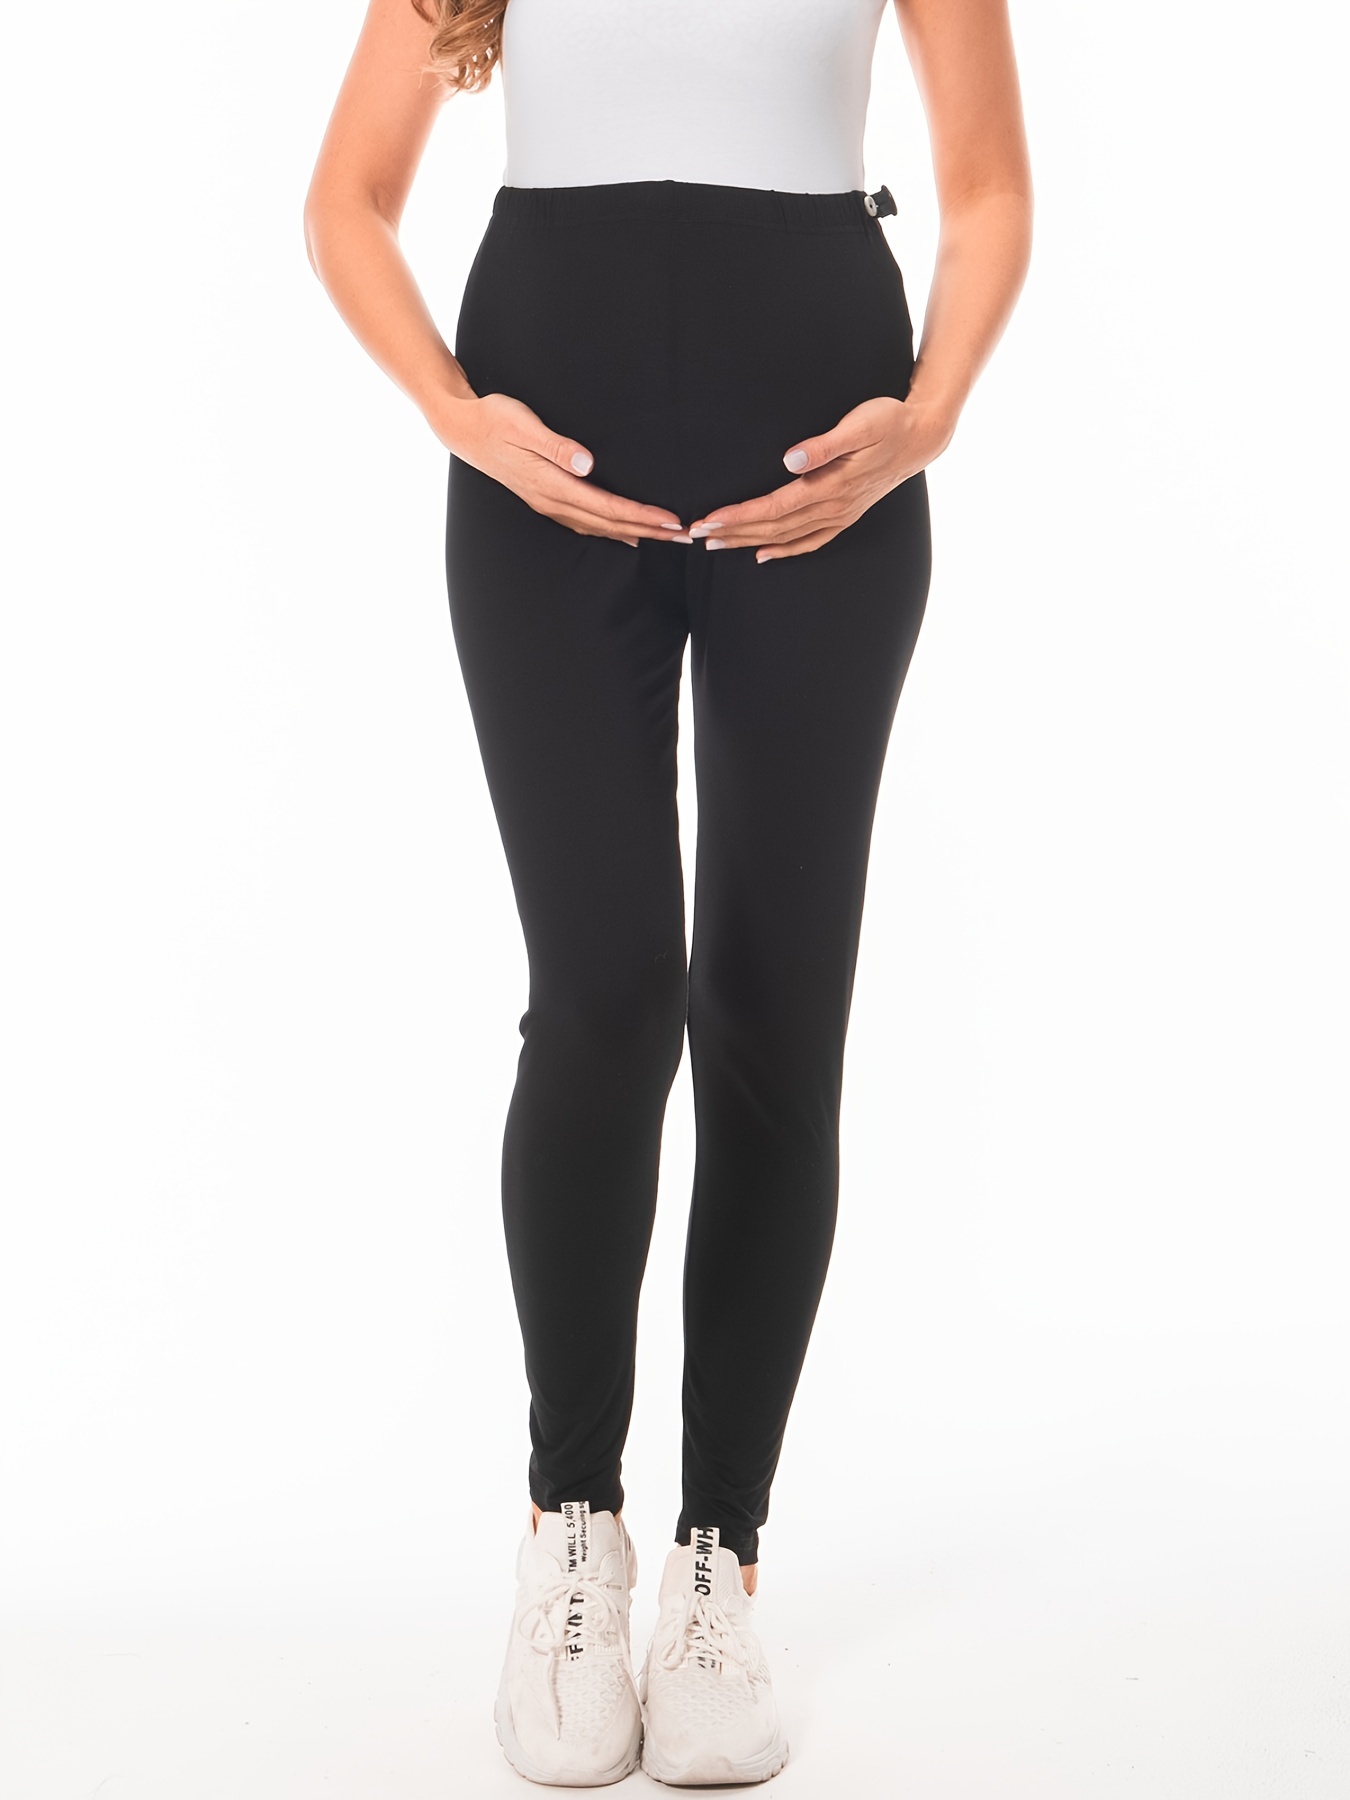 Maternity Women's Elastic Leggings Thick Fleece Thermal Yoga